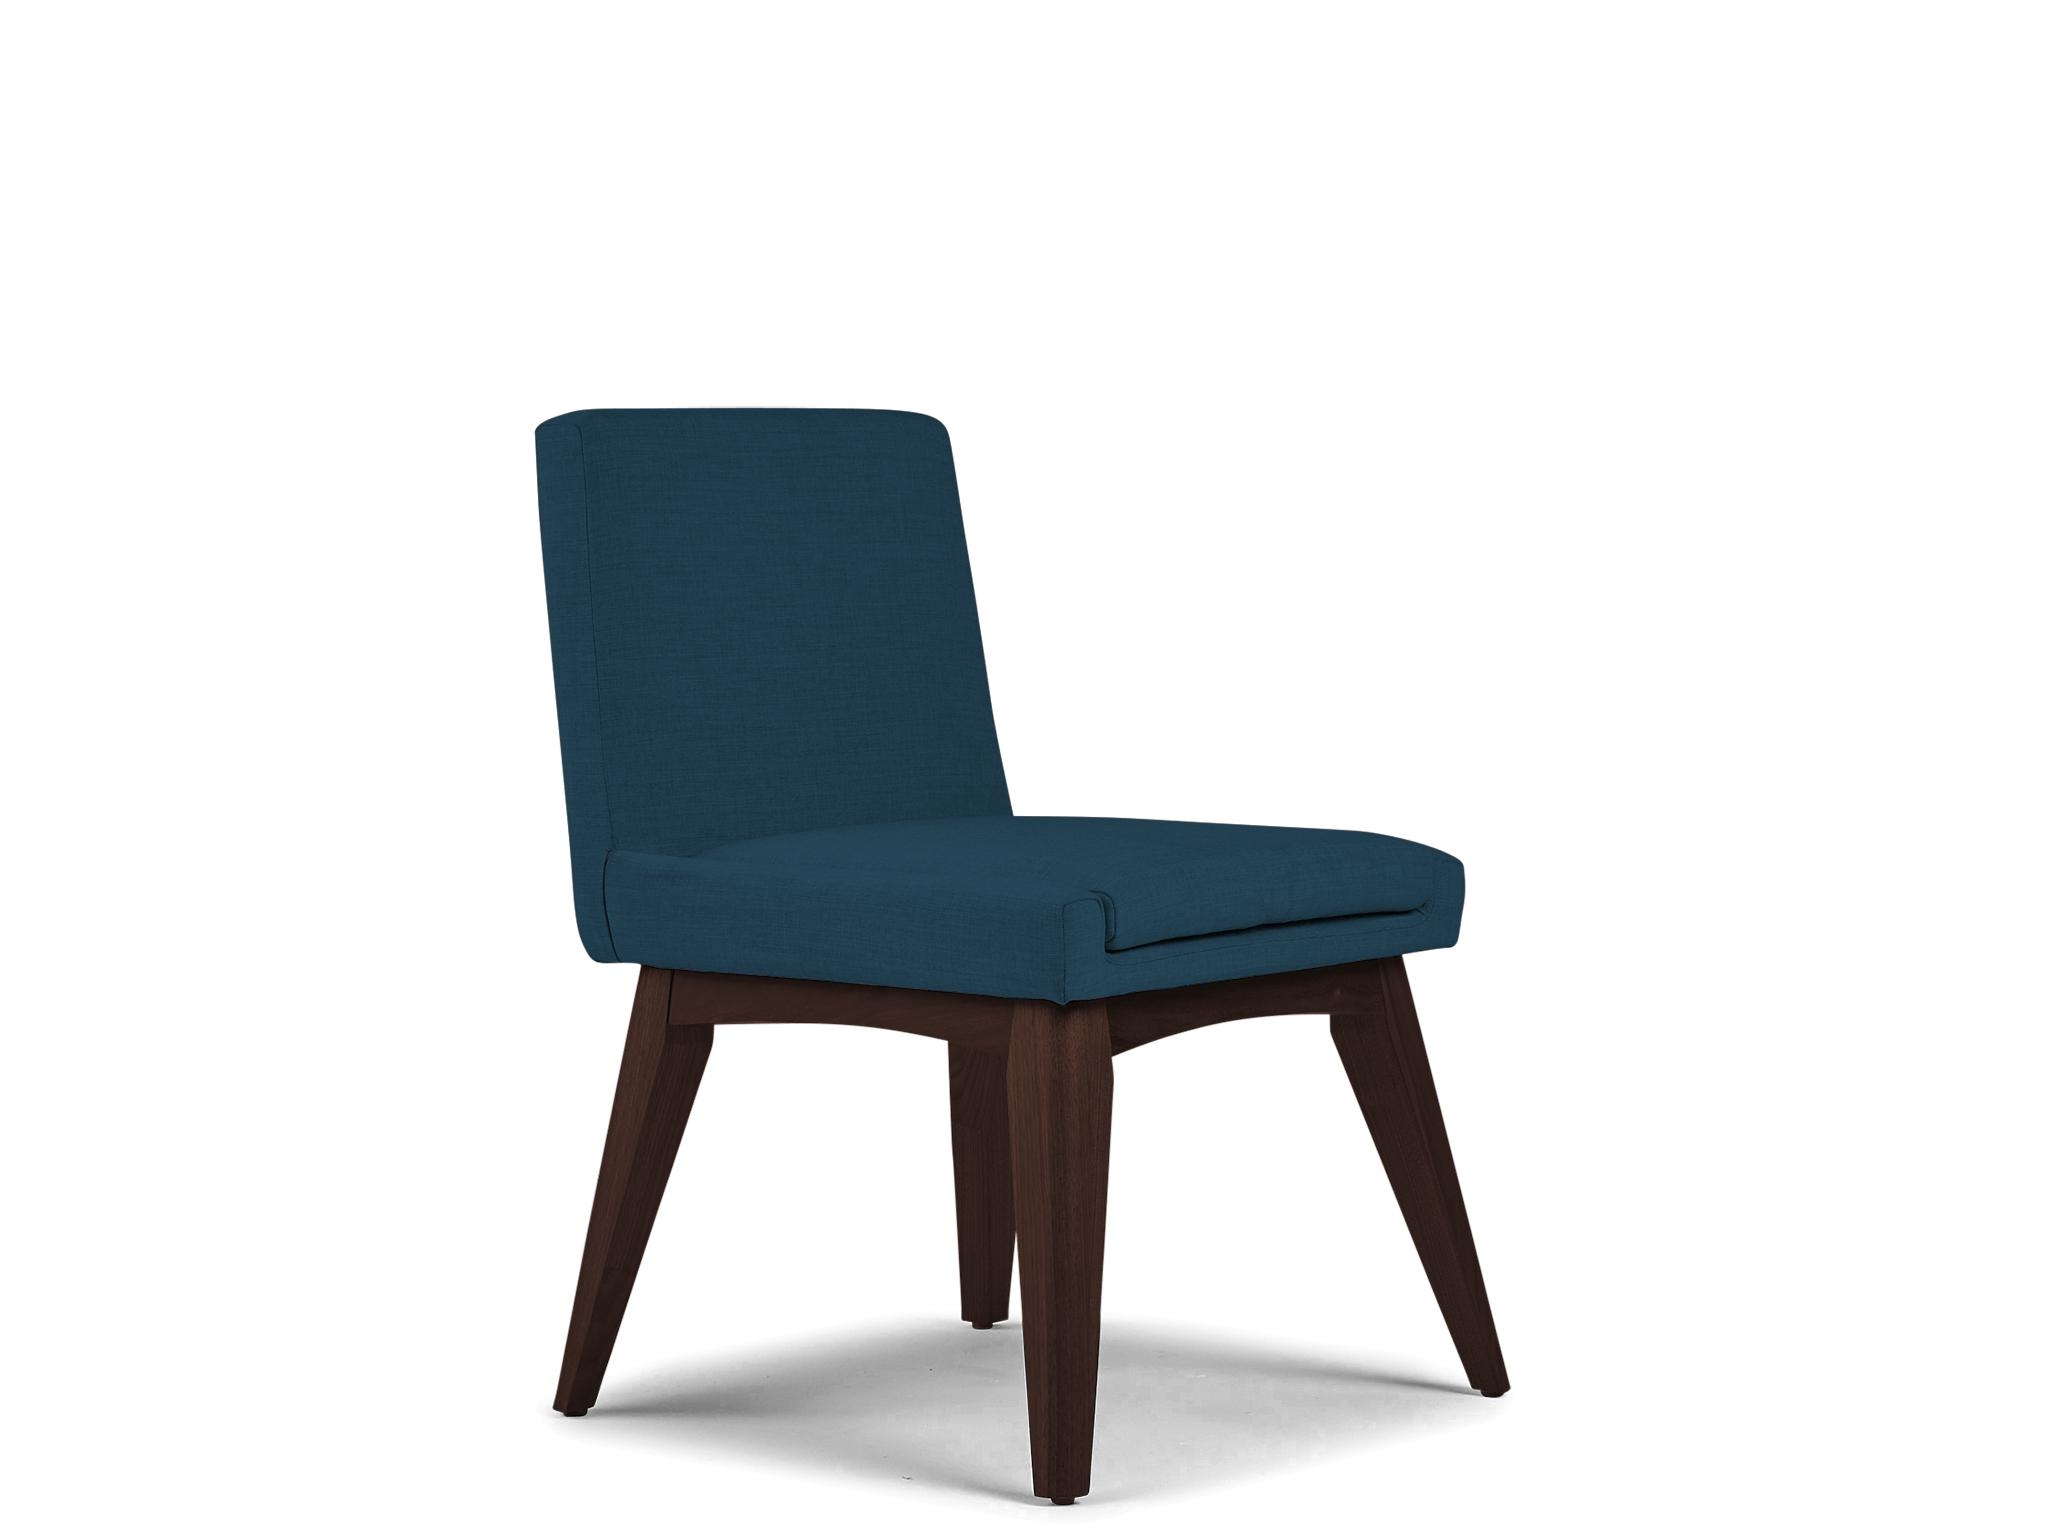 Blue Spencer Mid Century Modern Dining Chair - Key Largo Zenith Teal - Walnut - Image 1